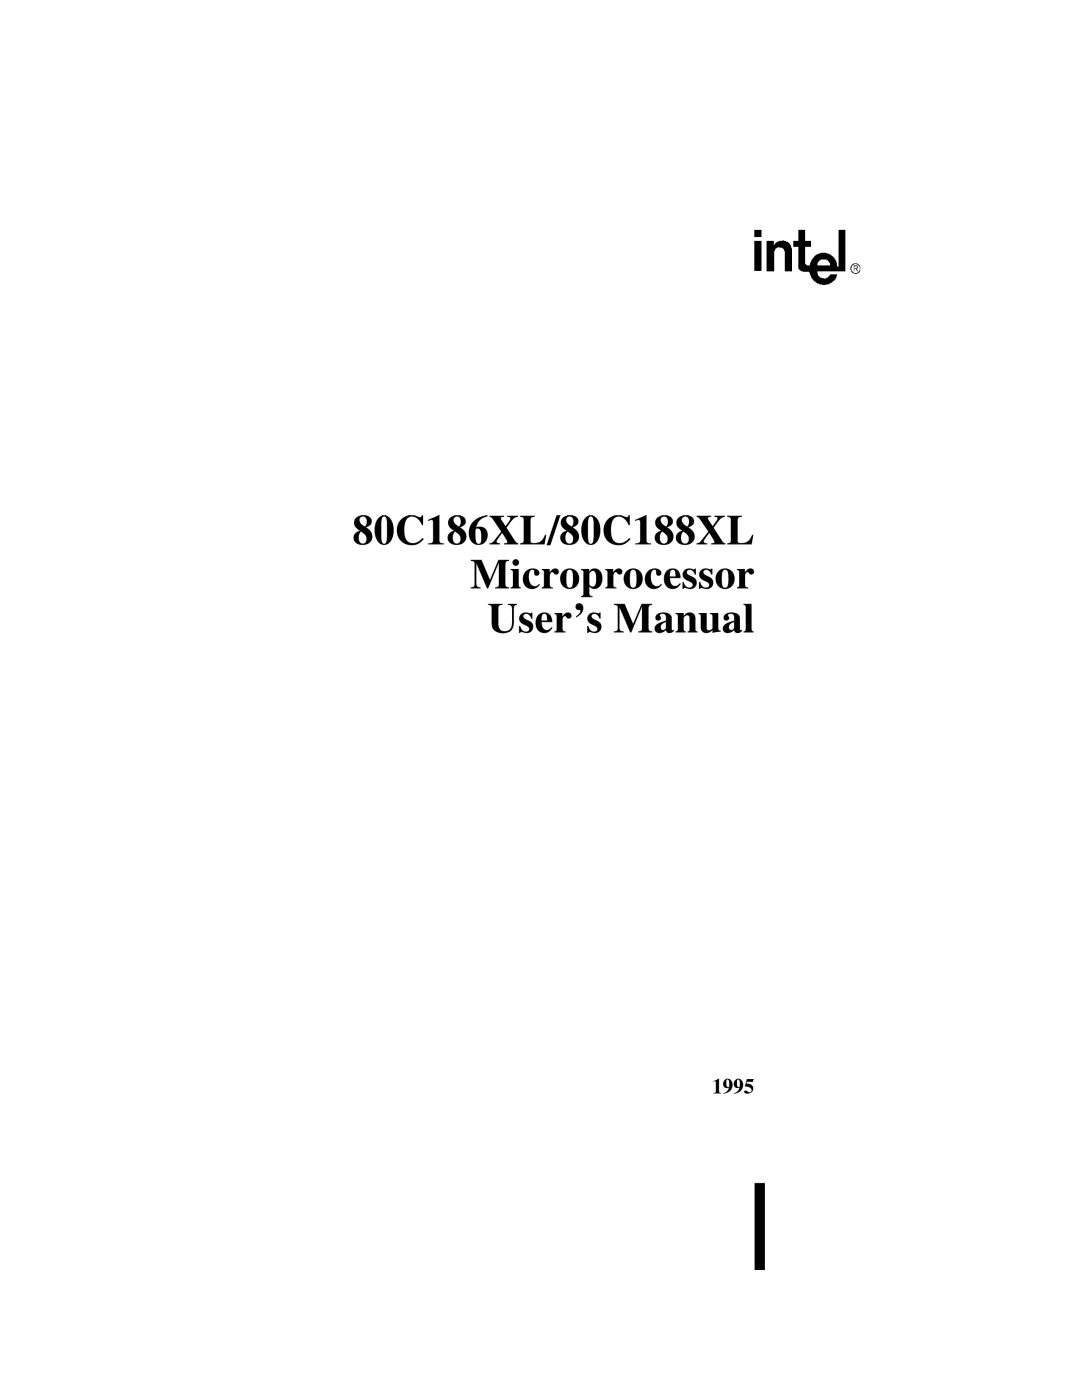 Intel user manual 80C186XL/80C188XL Microprocessor User’s Manual, 1995 